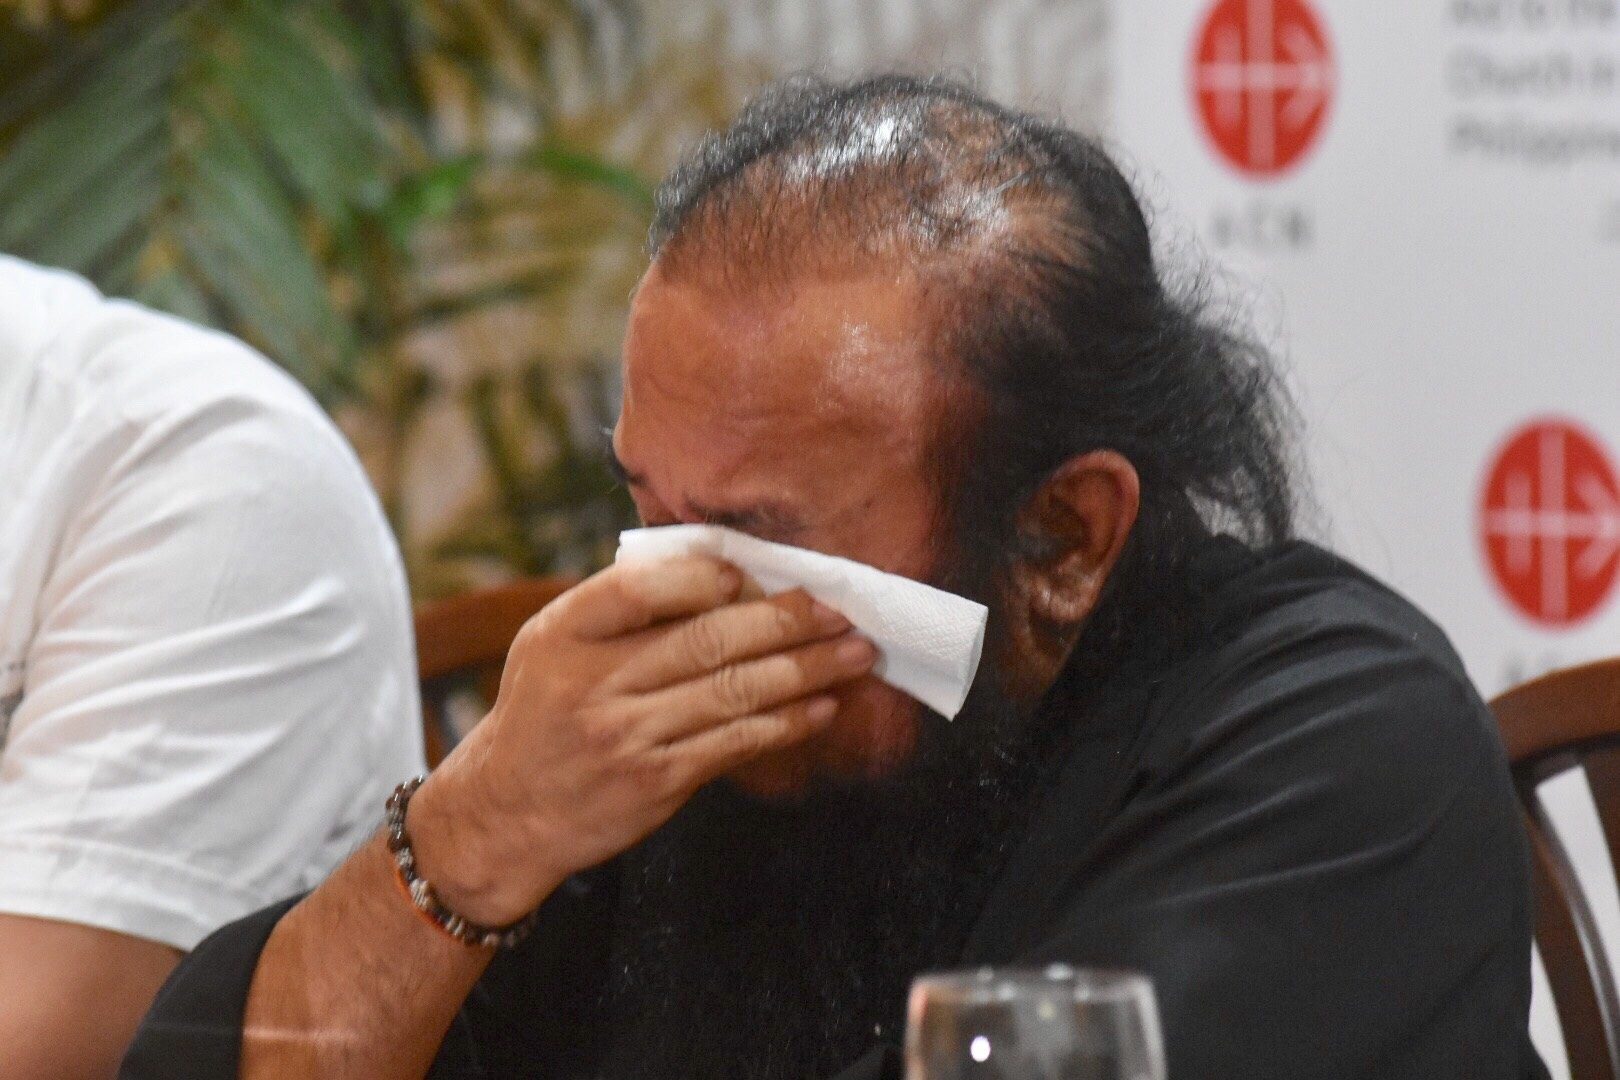 Marawi priest Chito Soganub says captivity a ‘test of faith’